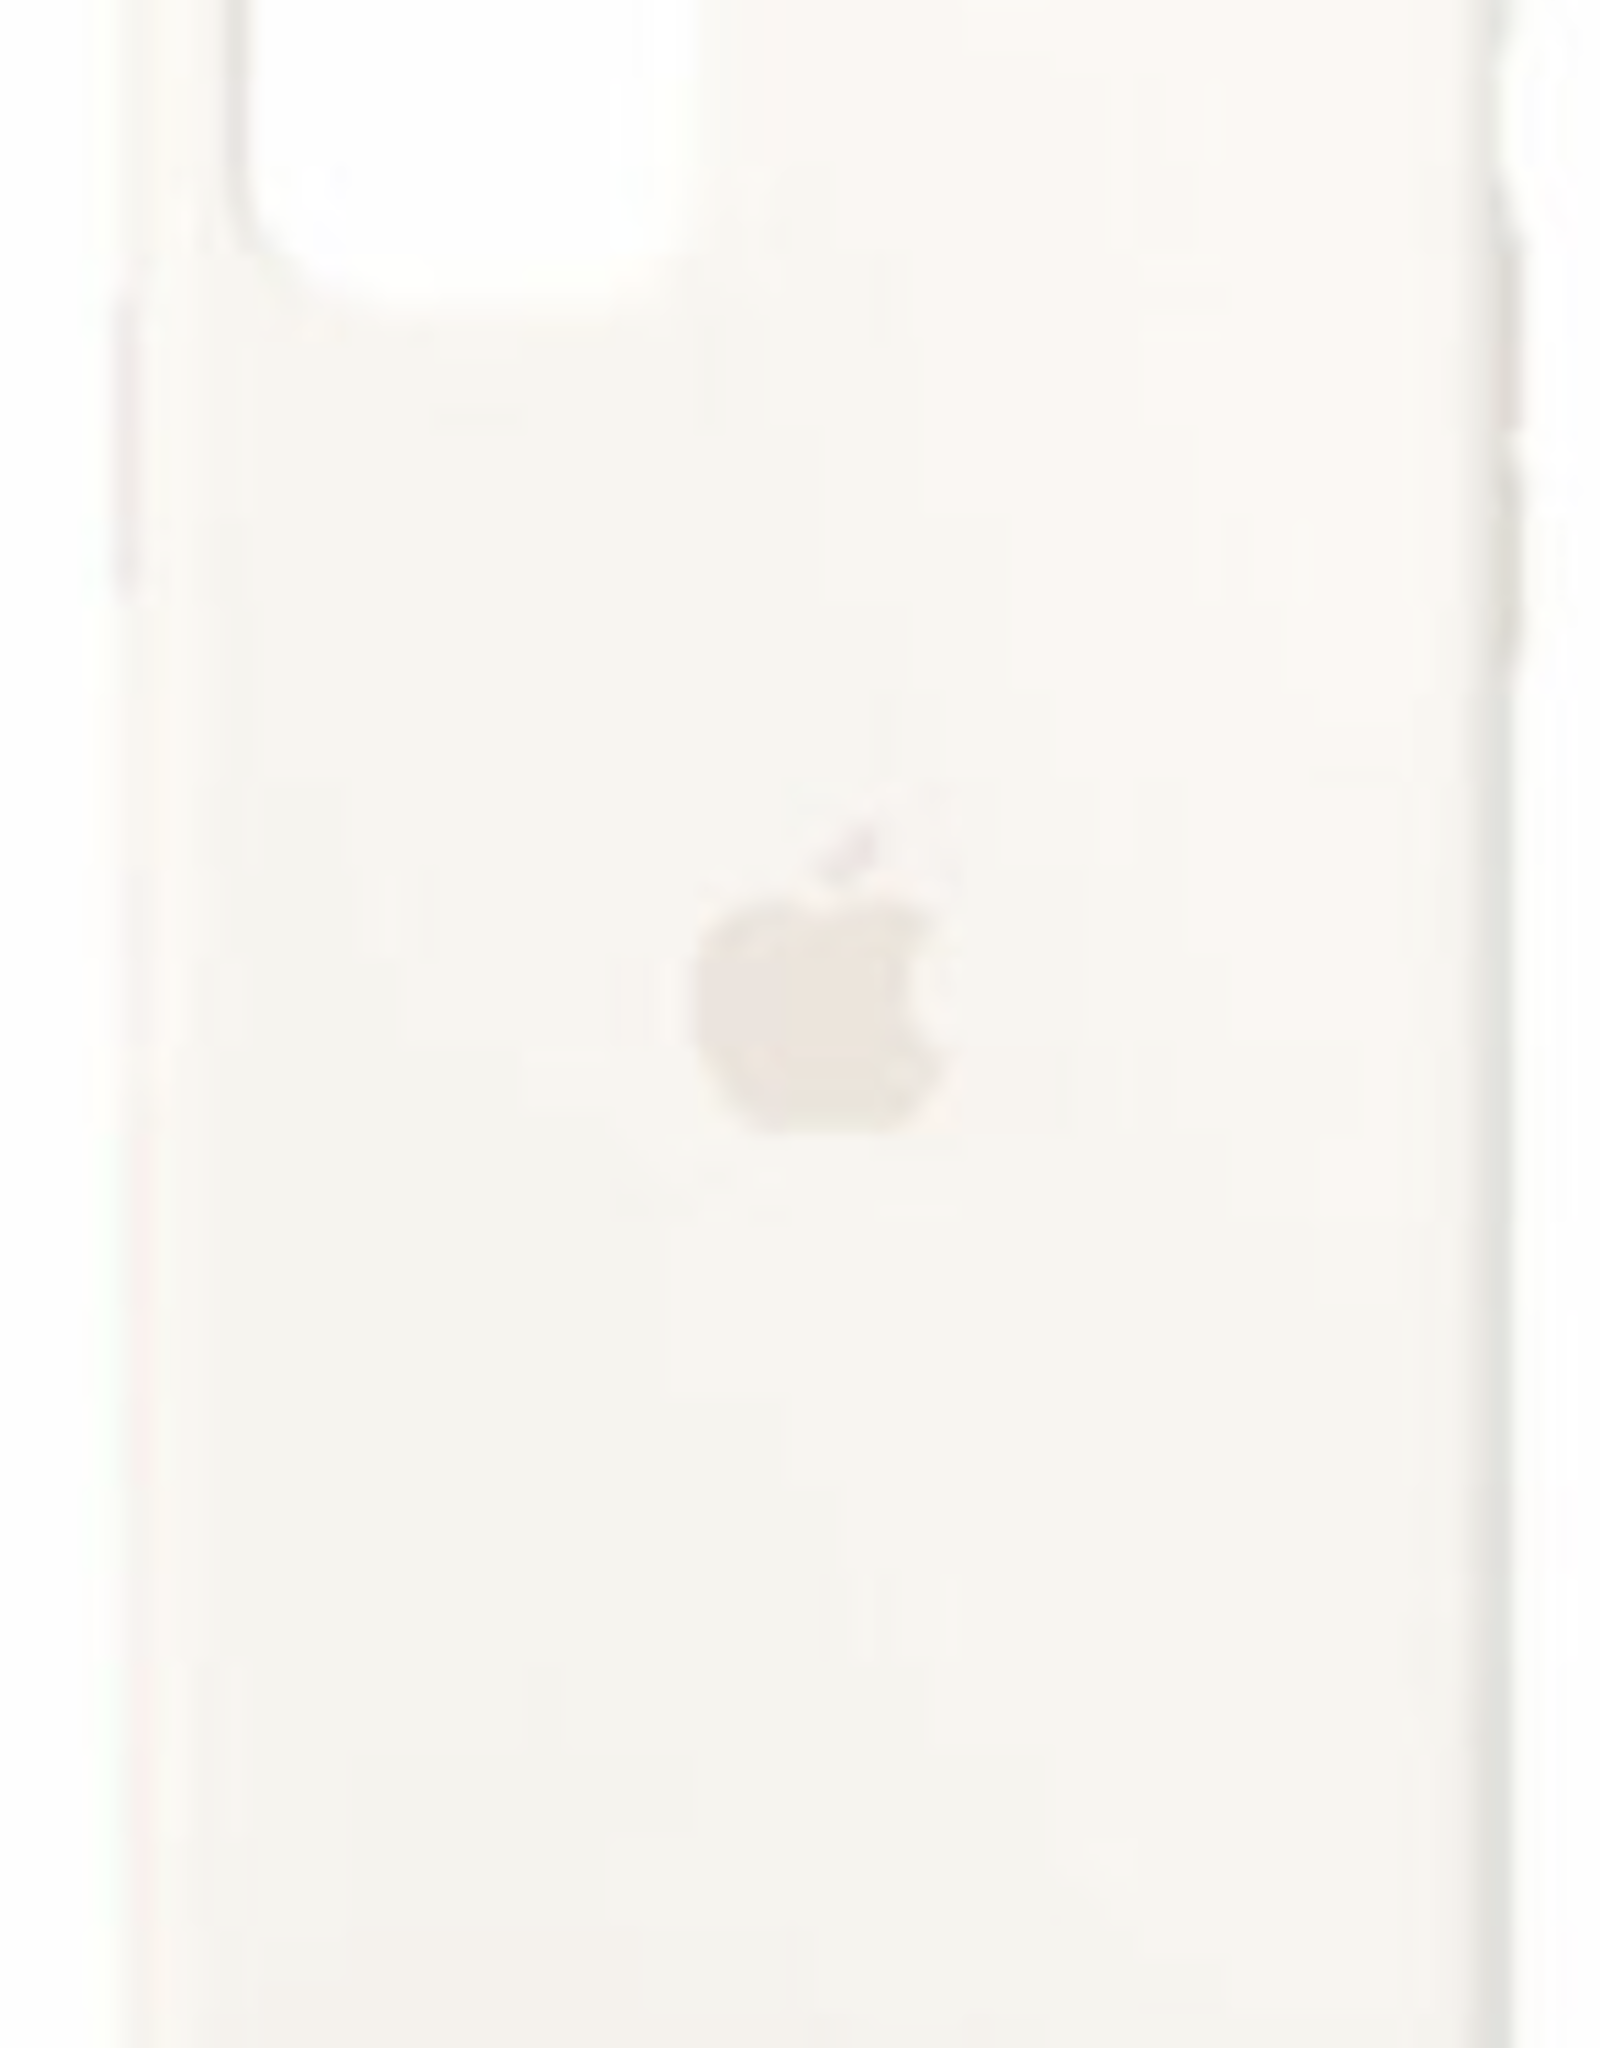 Apple Iphone 11 Silicone Case